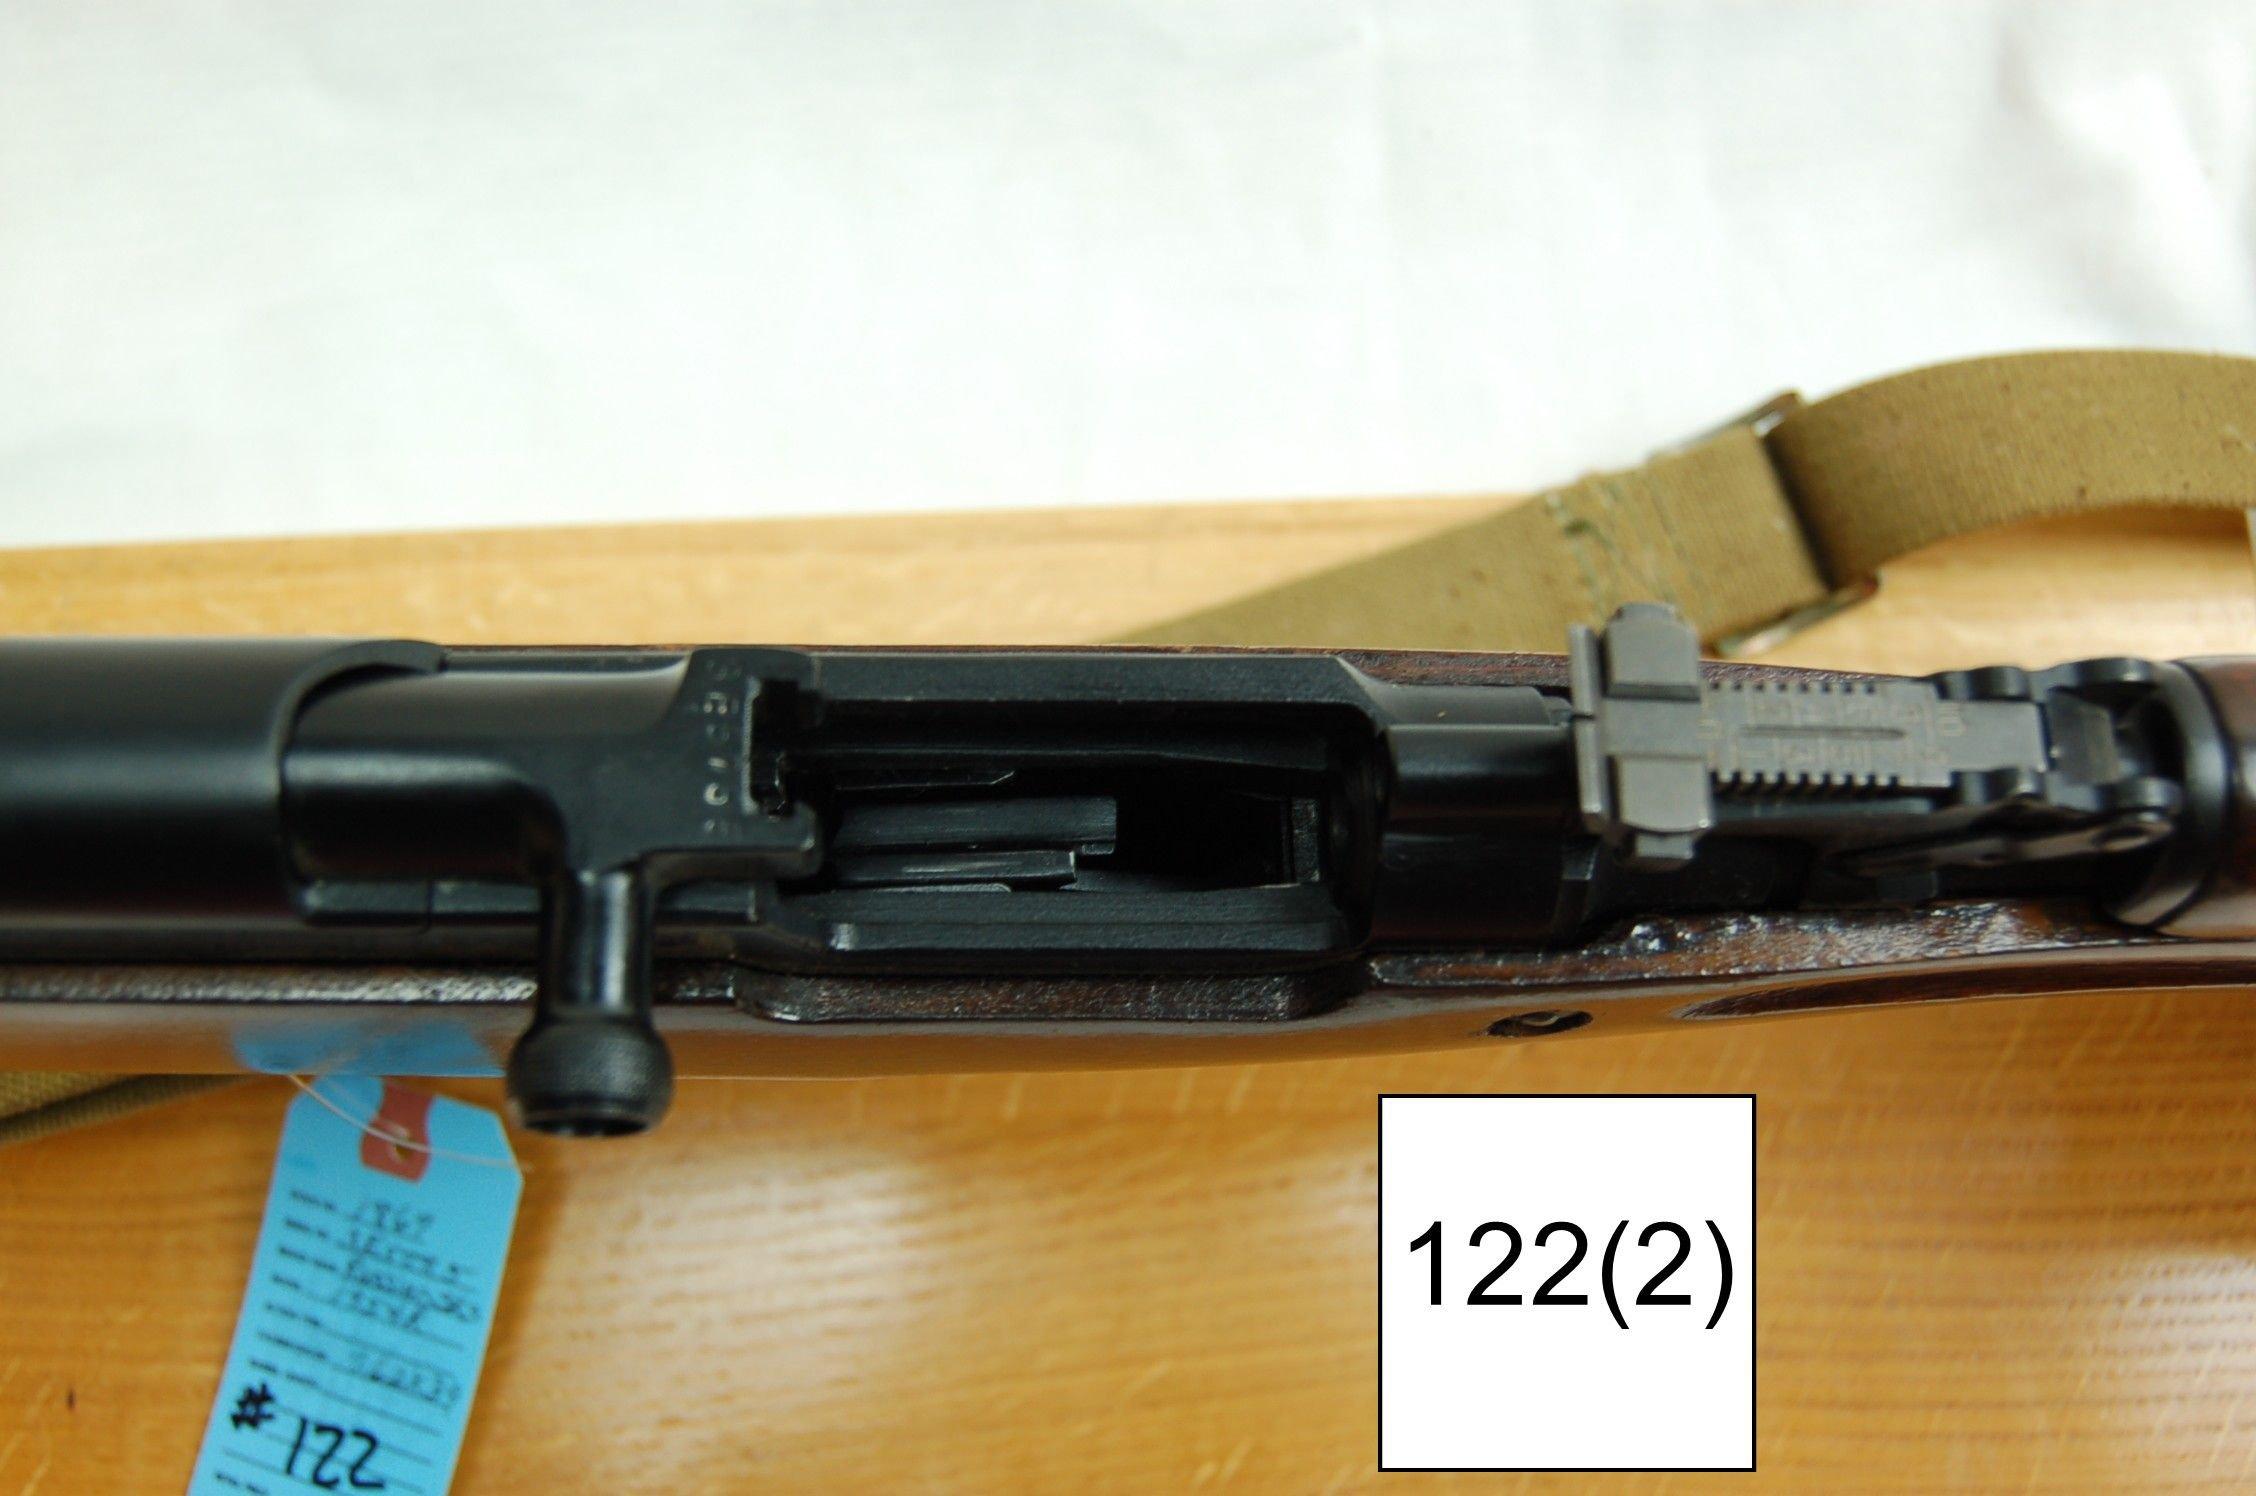 Russian SKS    Cal 7.62 x 39    Folding Bayonet    Condition: Good